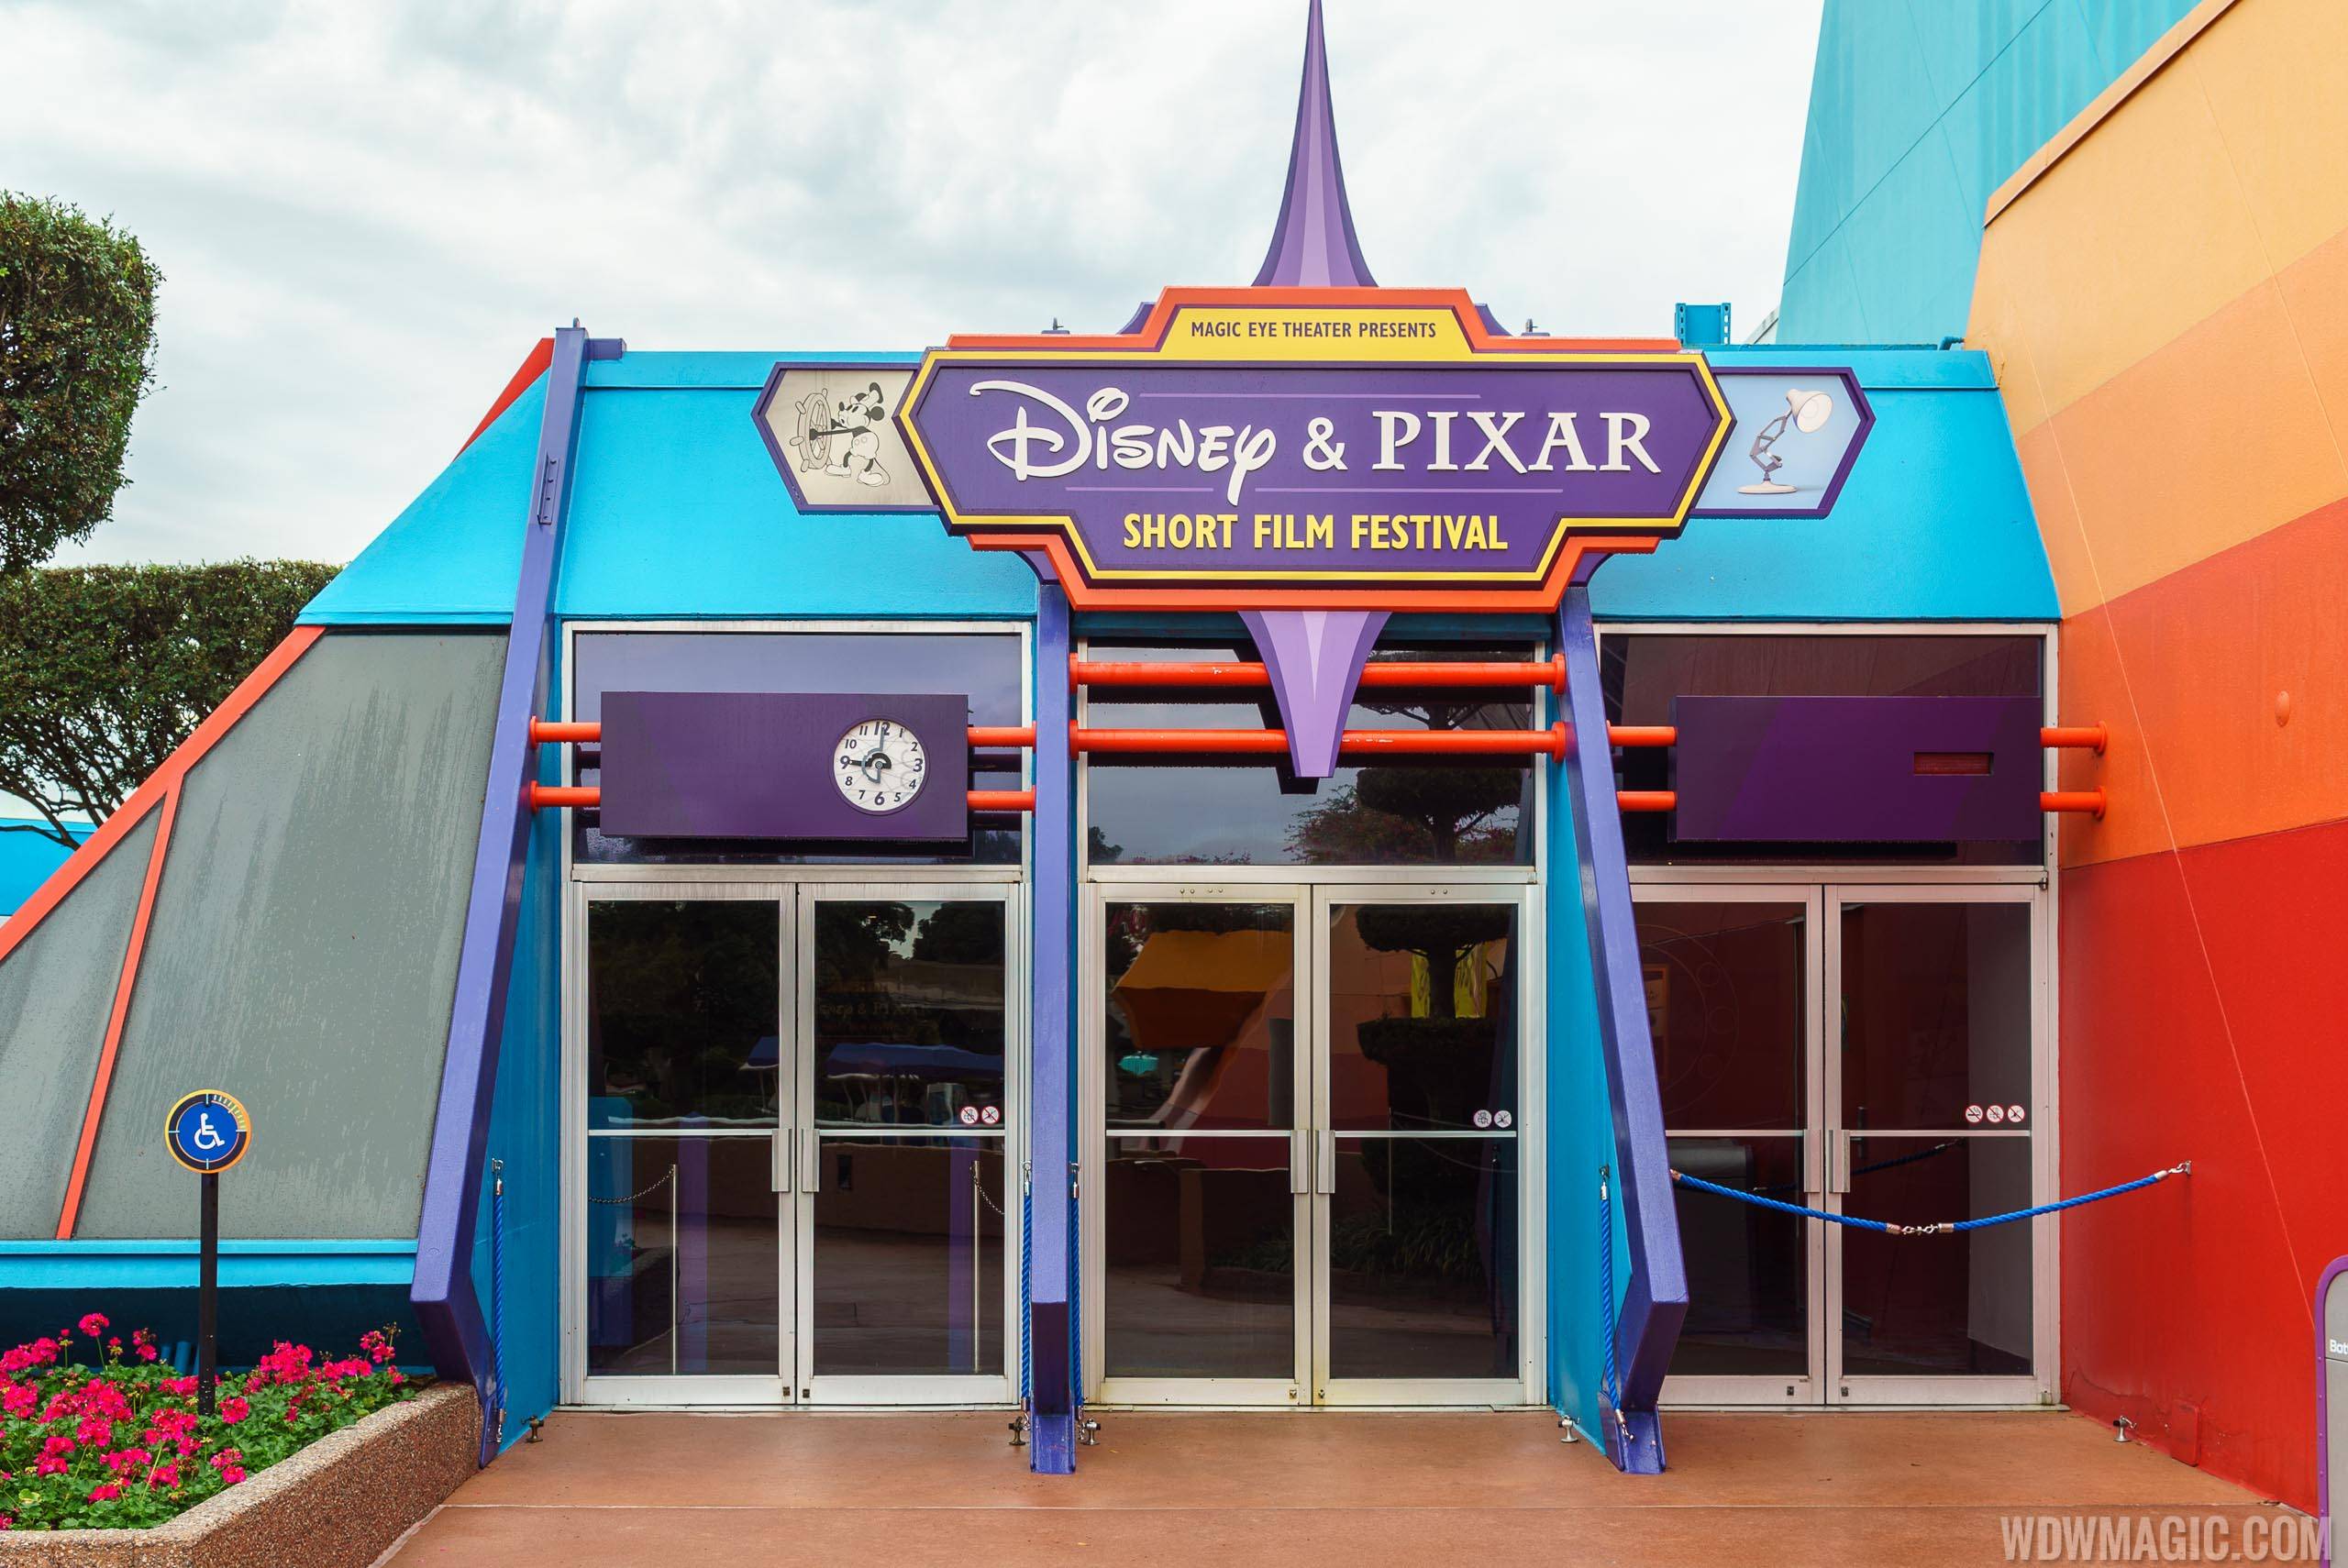 Disney and Pixar Short Film Festival opens at Epcot